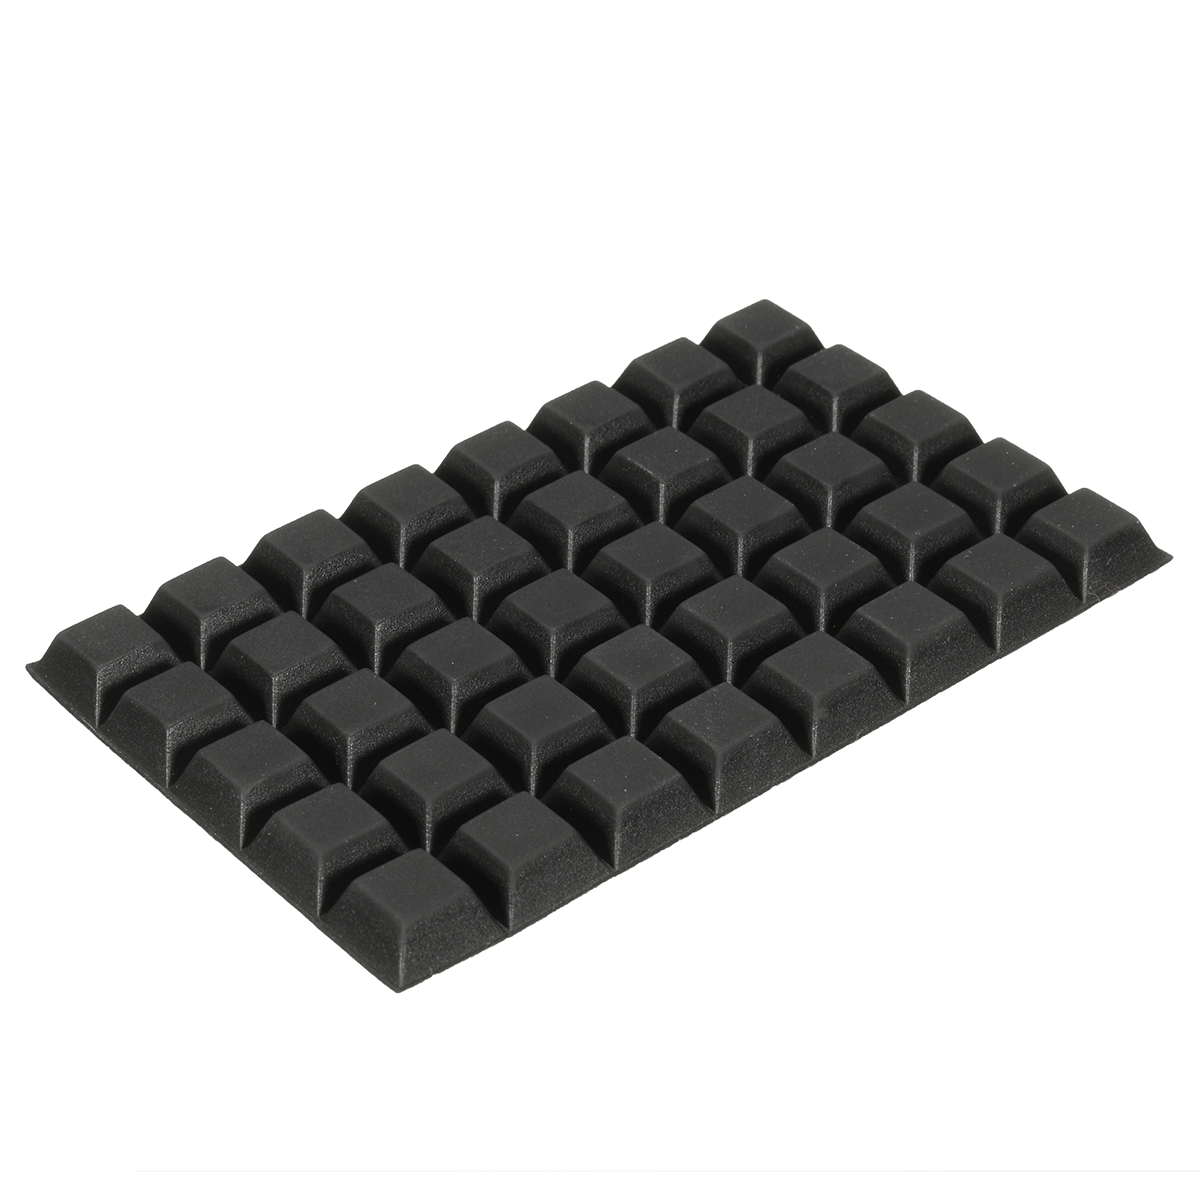 

40Pcs Square Self Adhesive Stick on Rubber Feet Bumper Door Furniture Buffer Pad